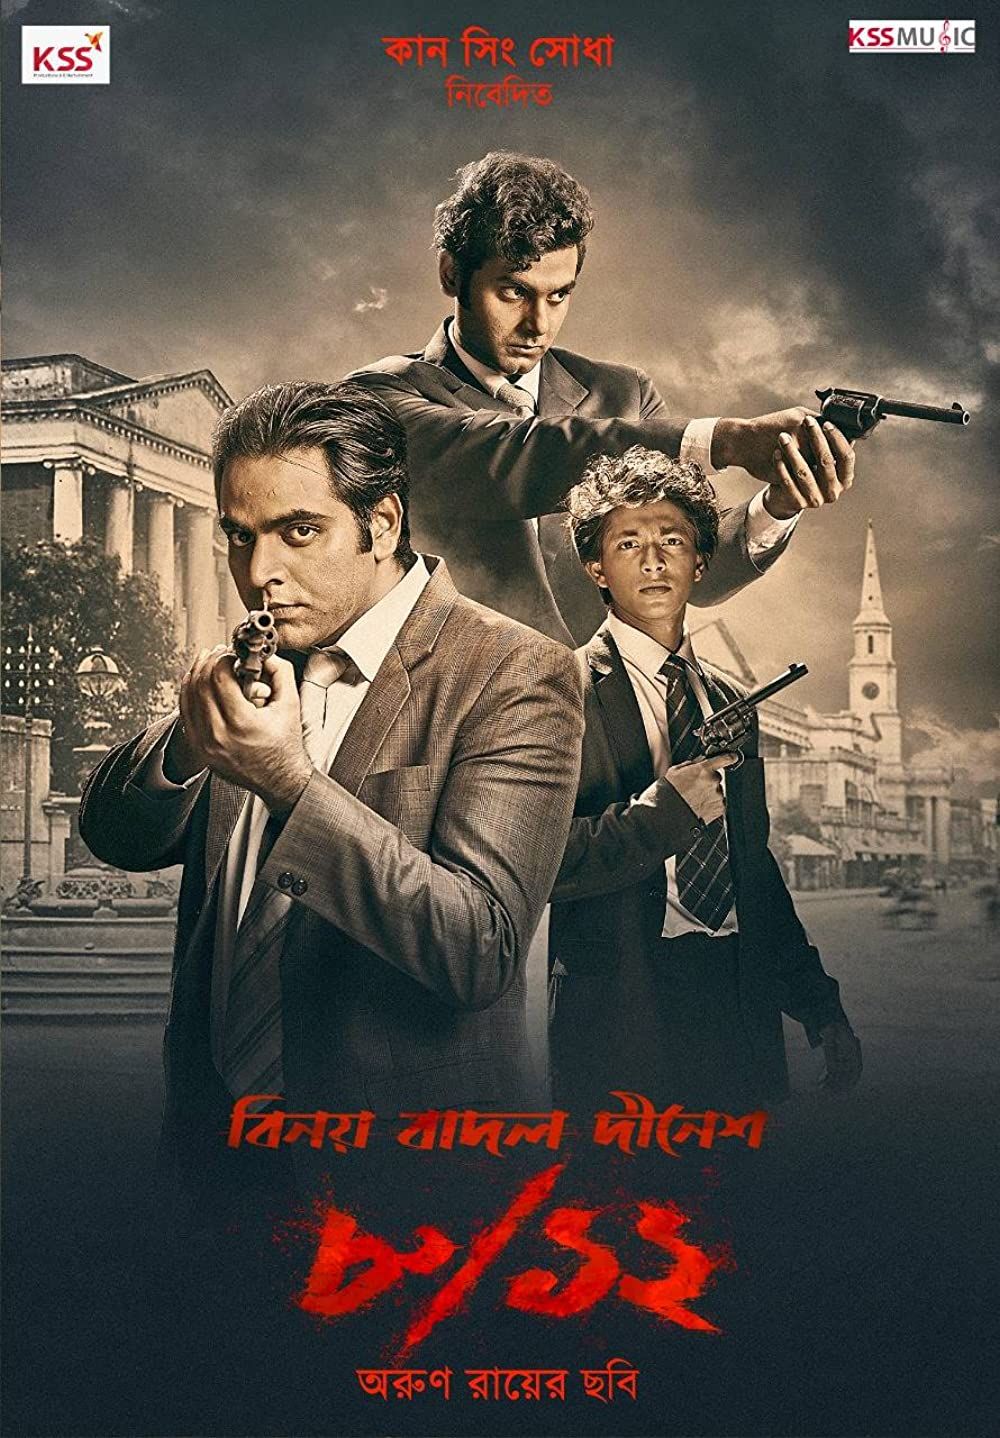 8-12 Binay Badal Dinesh (2022) Bengali HDRip download full movie